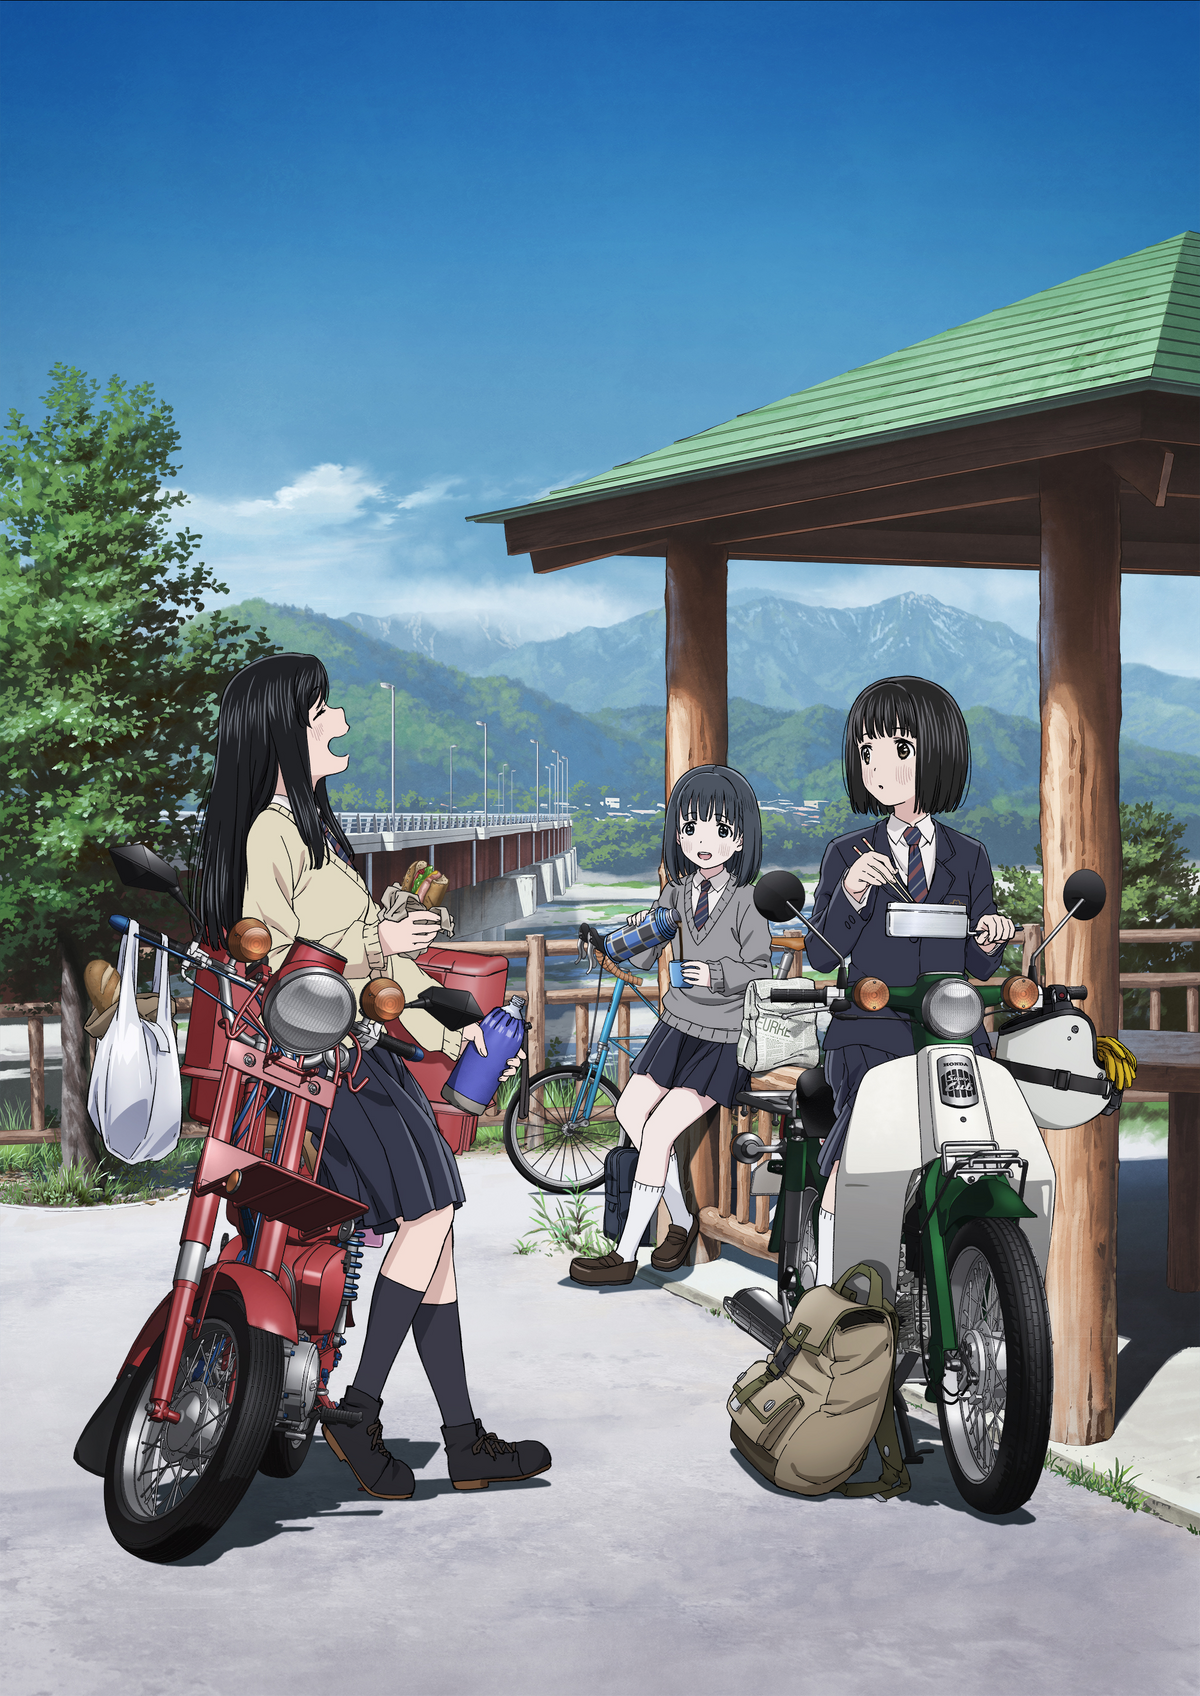 Akira Anime: Futuristic Motorcycle Ride